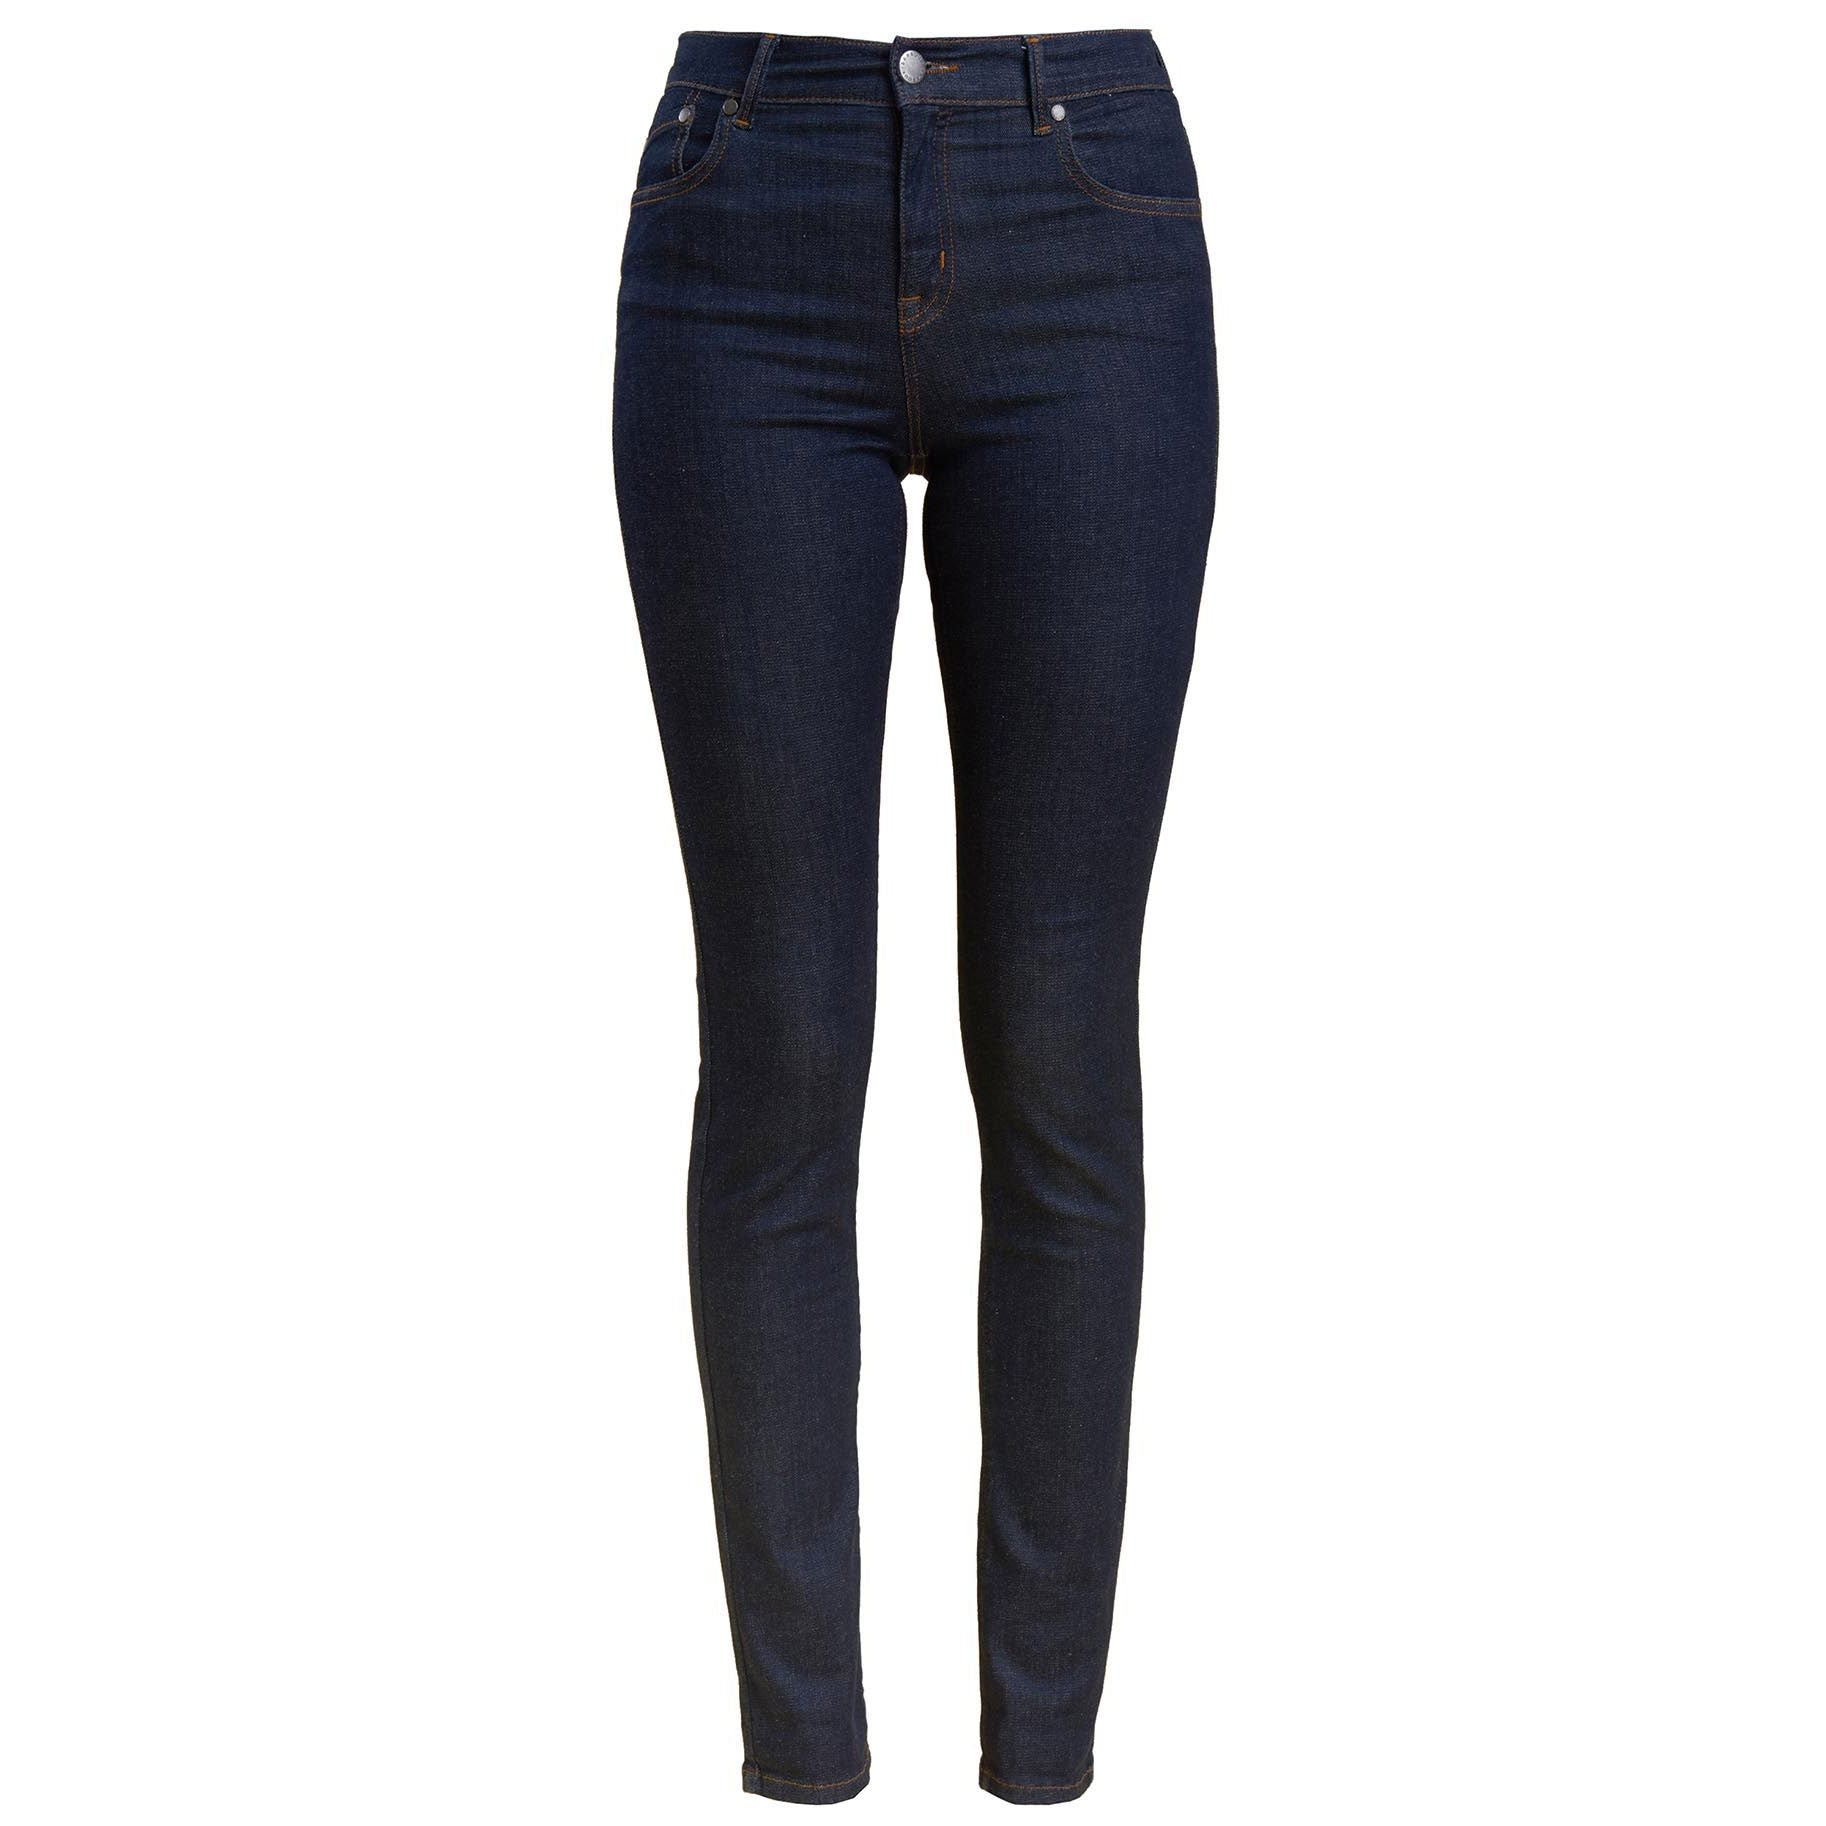 Curvy Fit Slim High Jeans - Pale denim blue - Ladies | H&M US